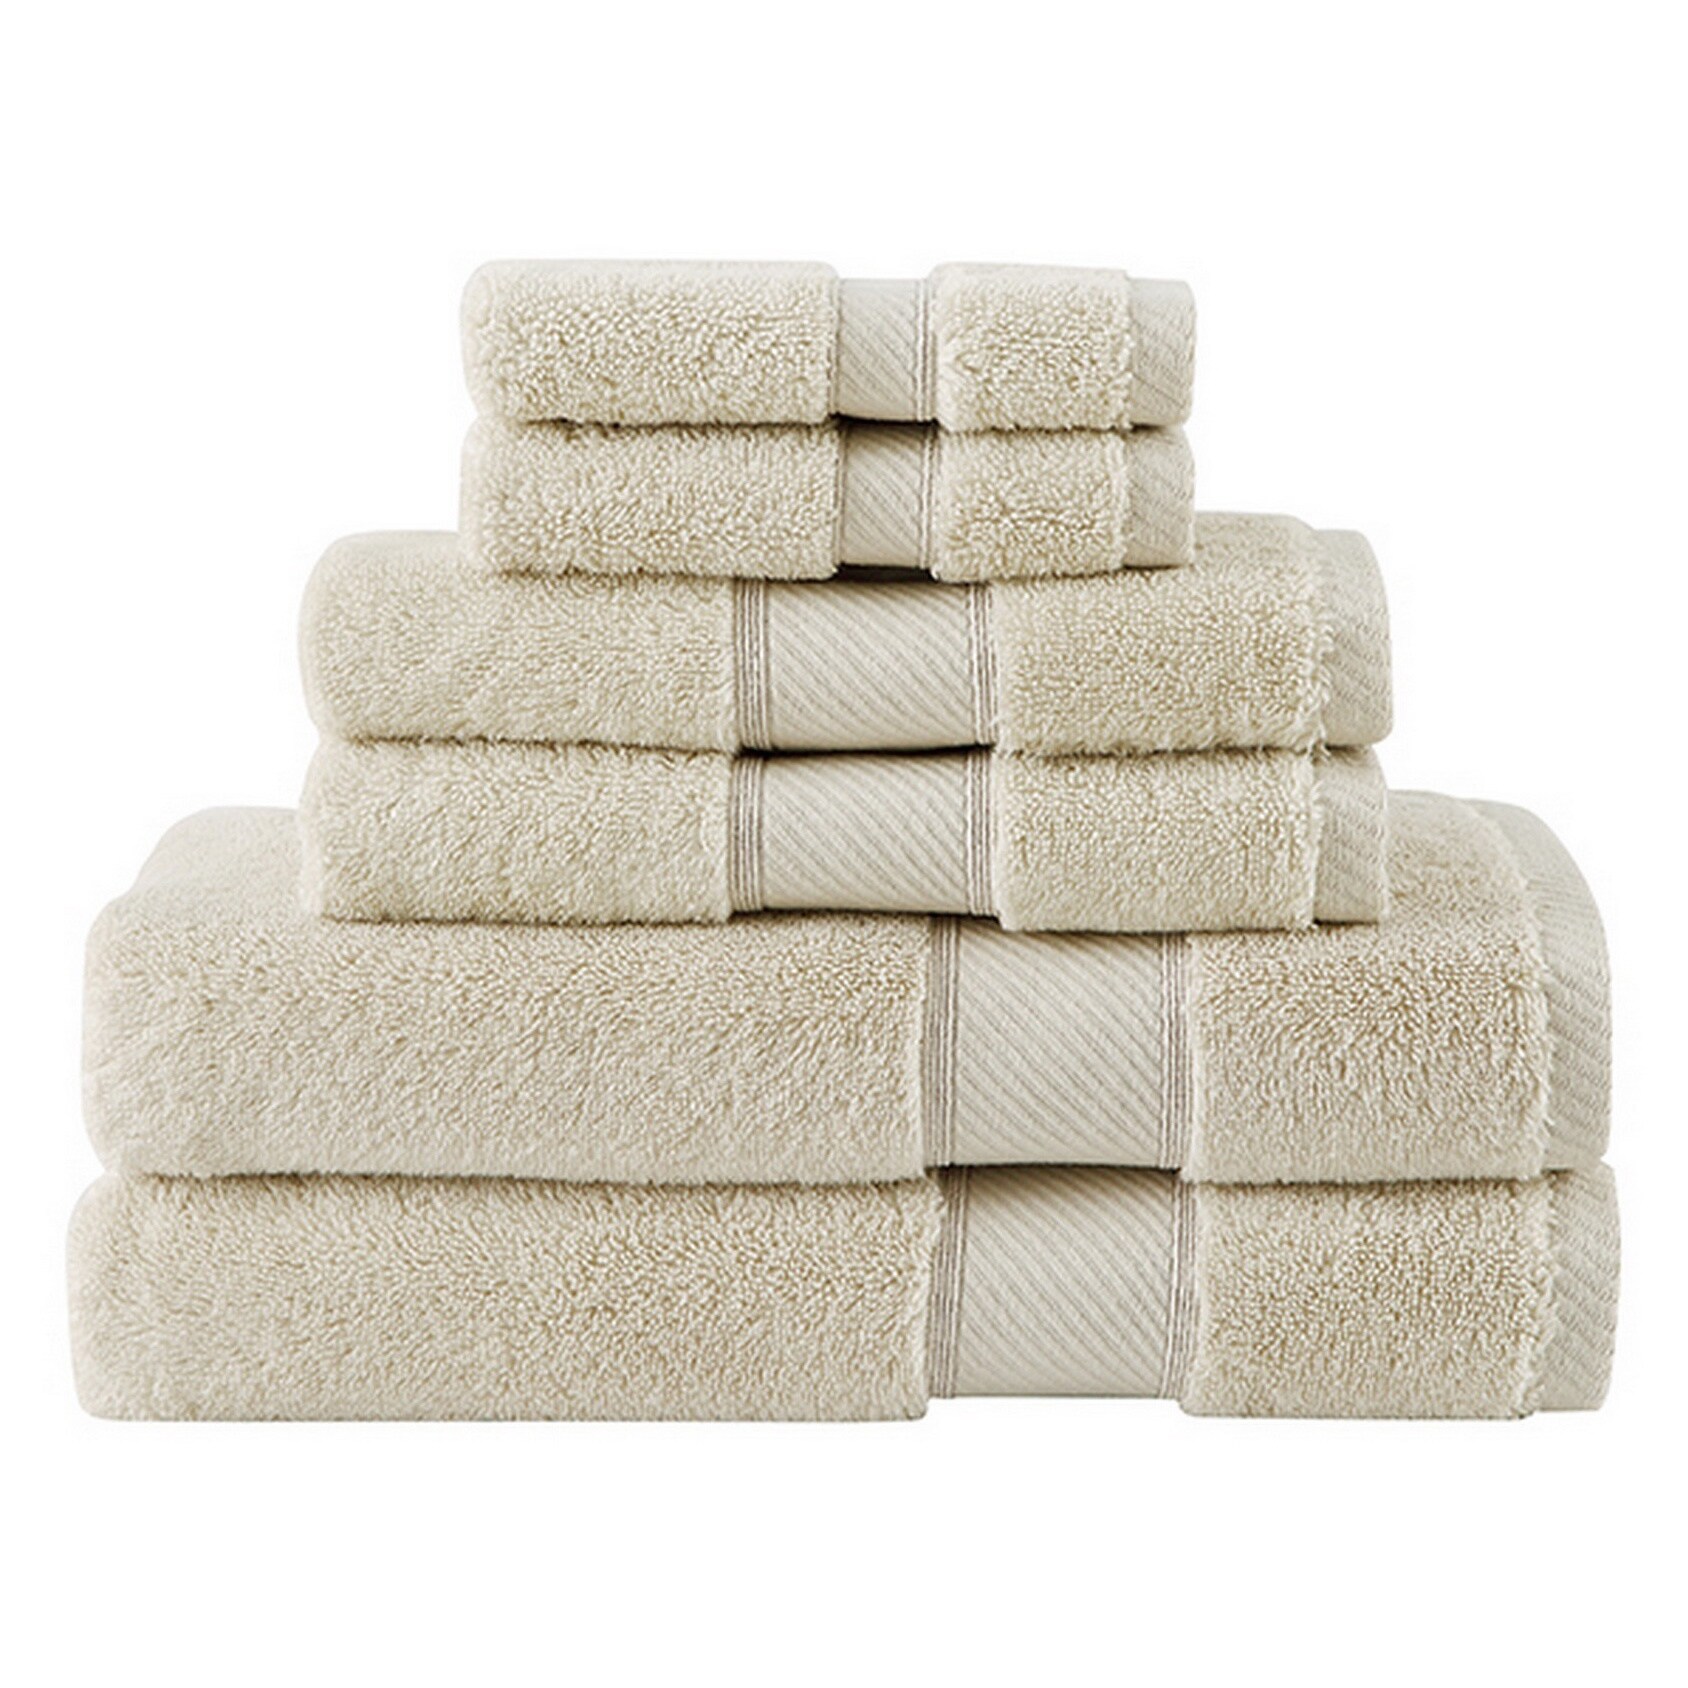 $15 Charisma White Classic Hand Towel Shower Gym Spa Bathroom Hand Towel